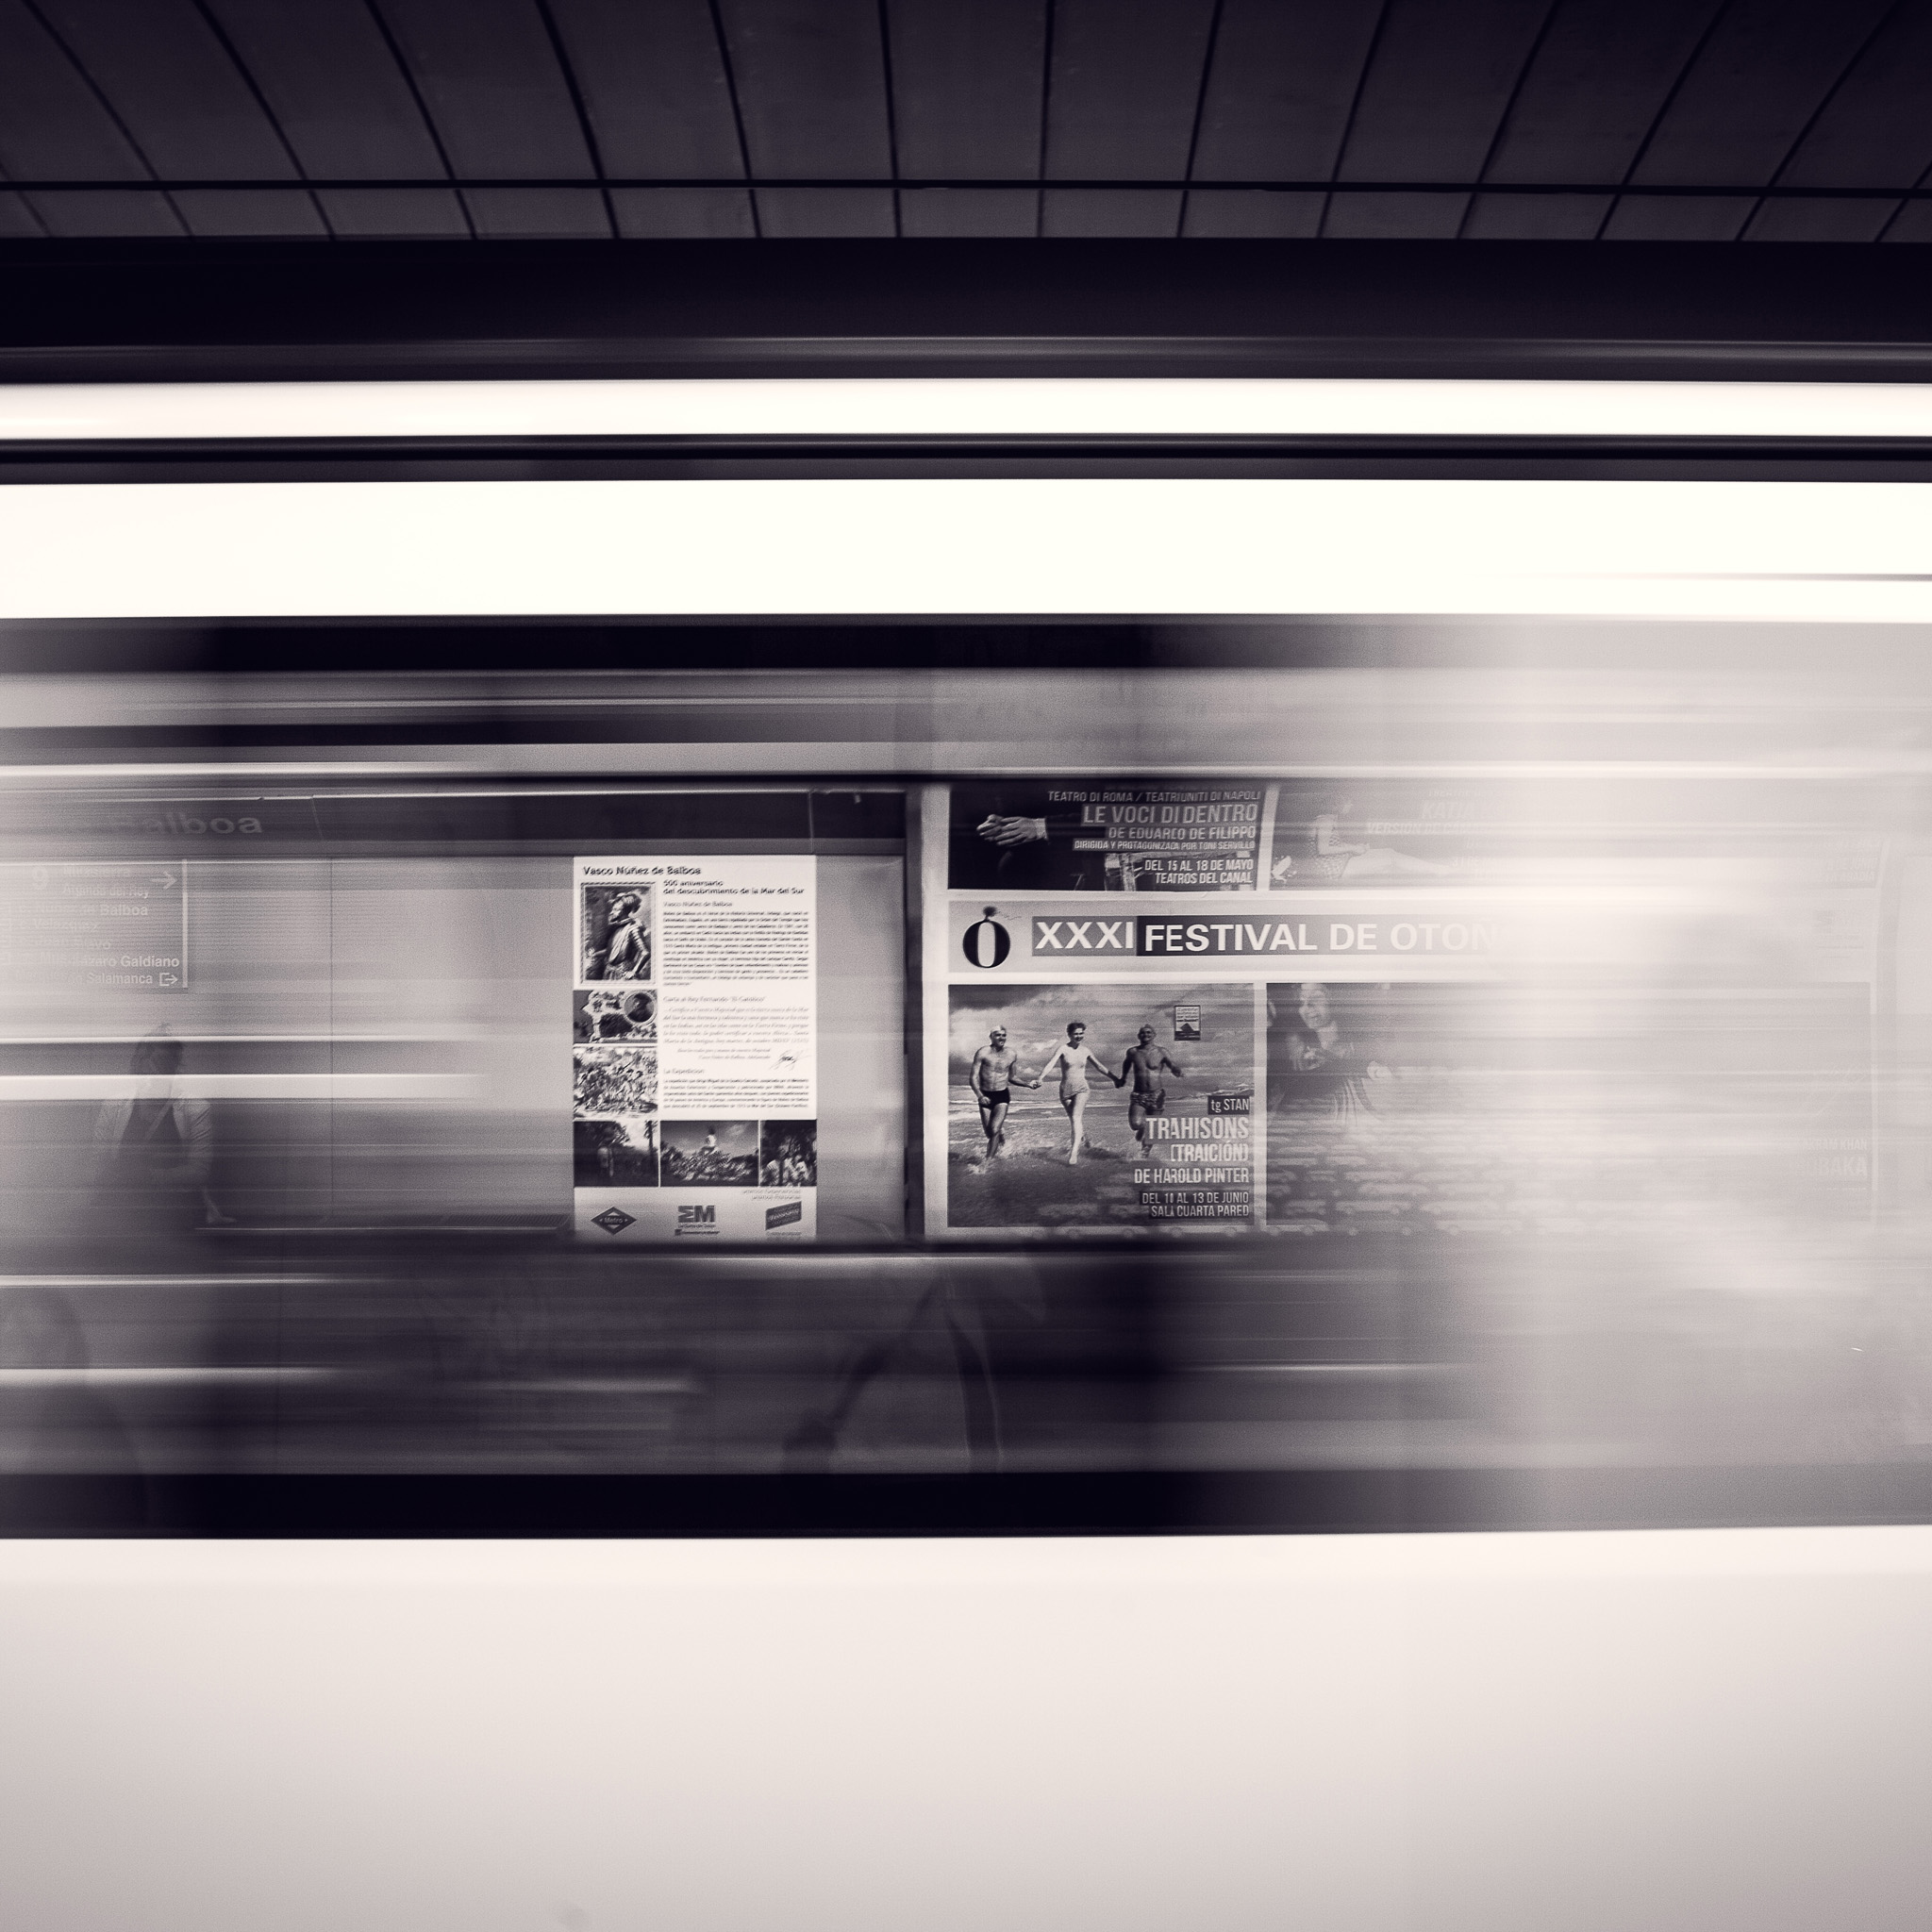 mario calvo - speeding metro train ipad wallpaper